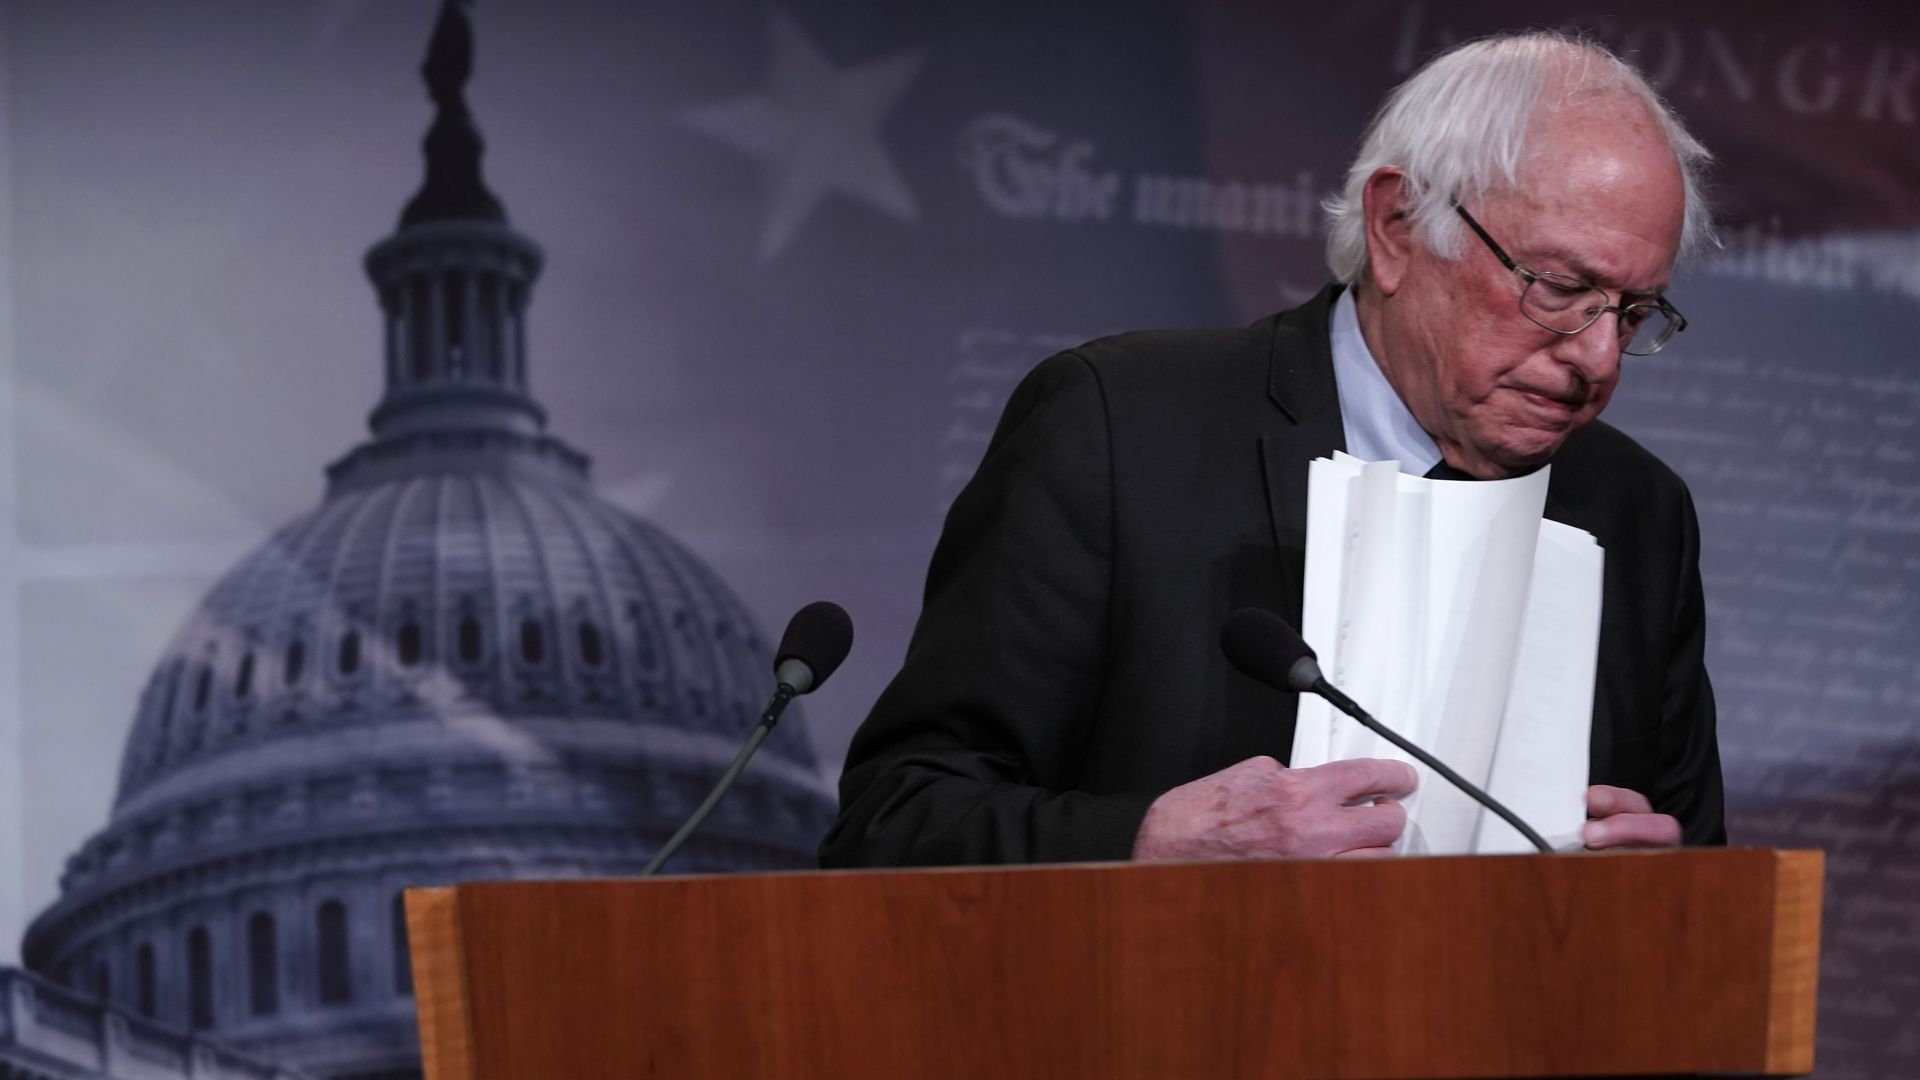 Bernie Sanders at a podium